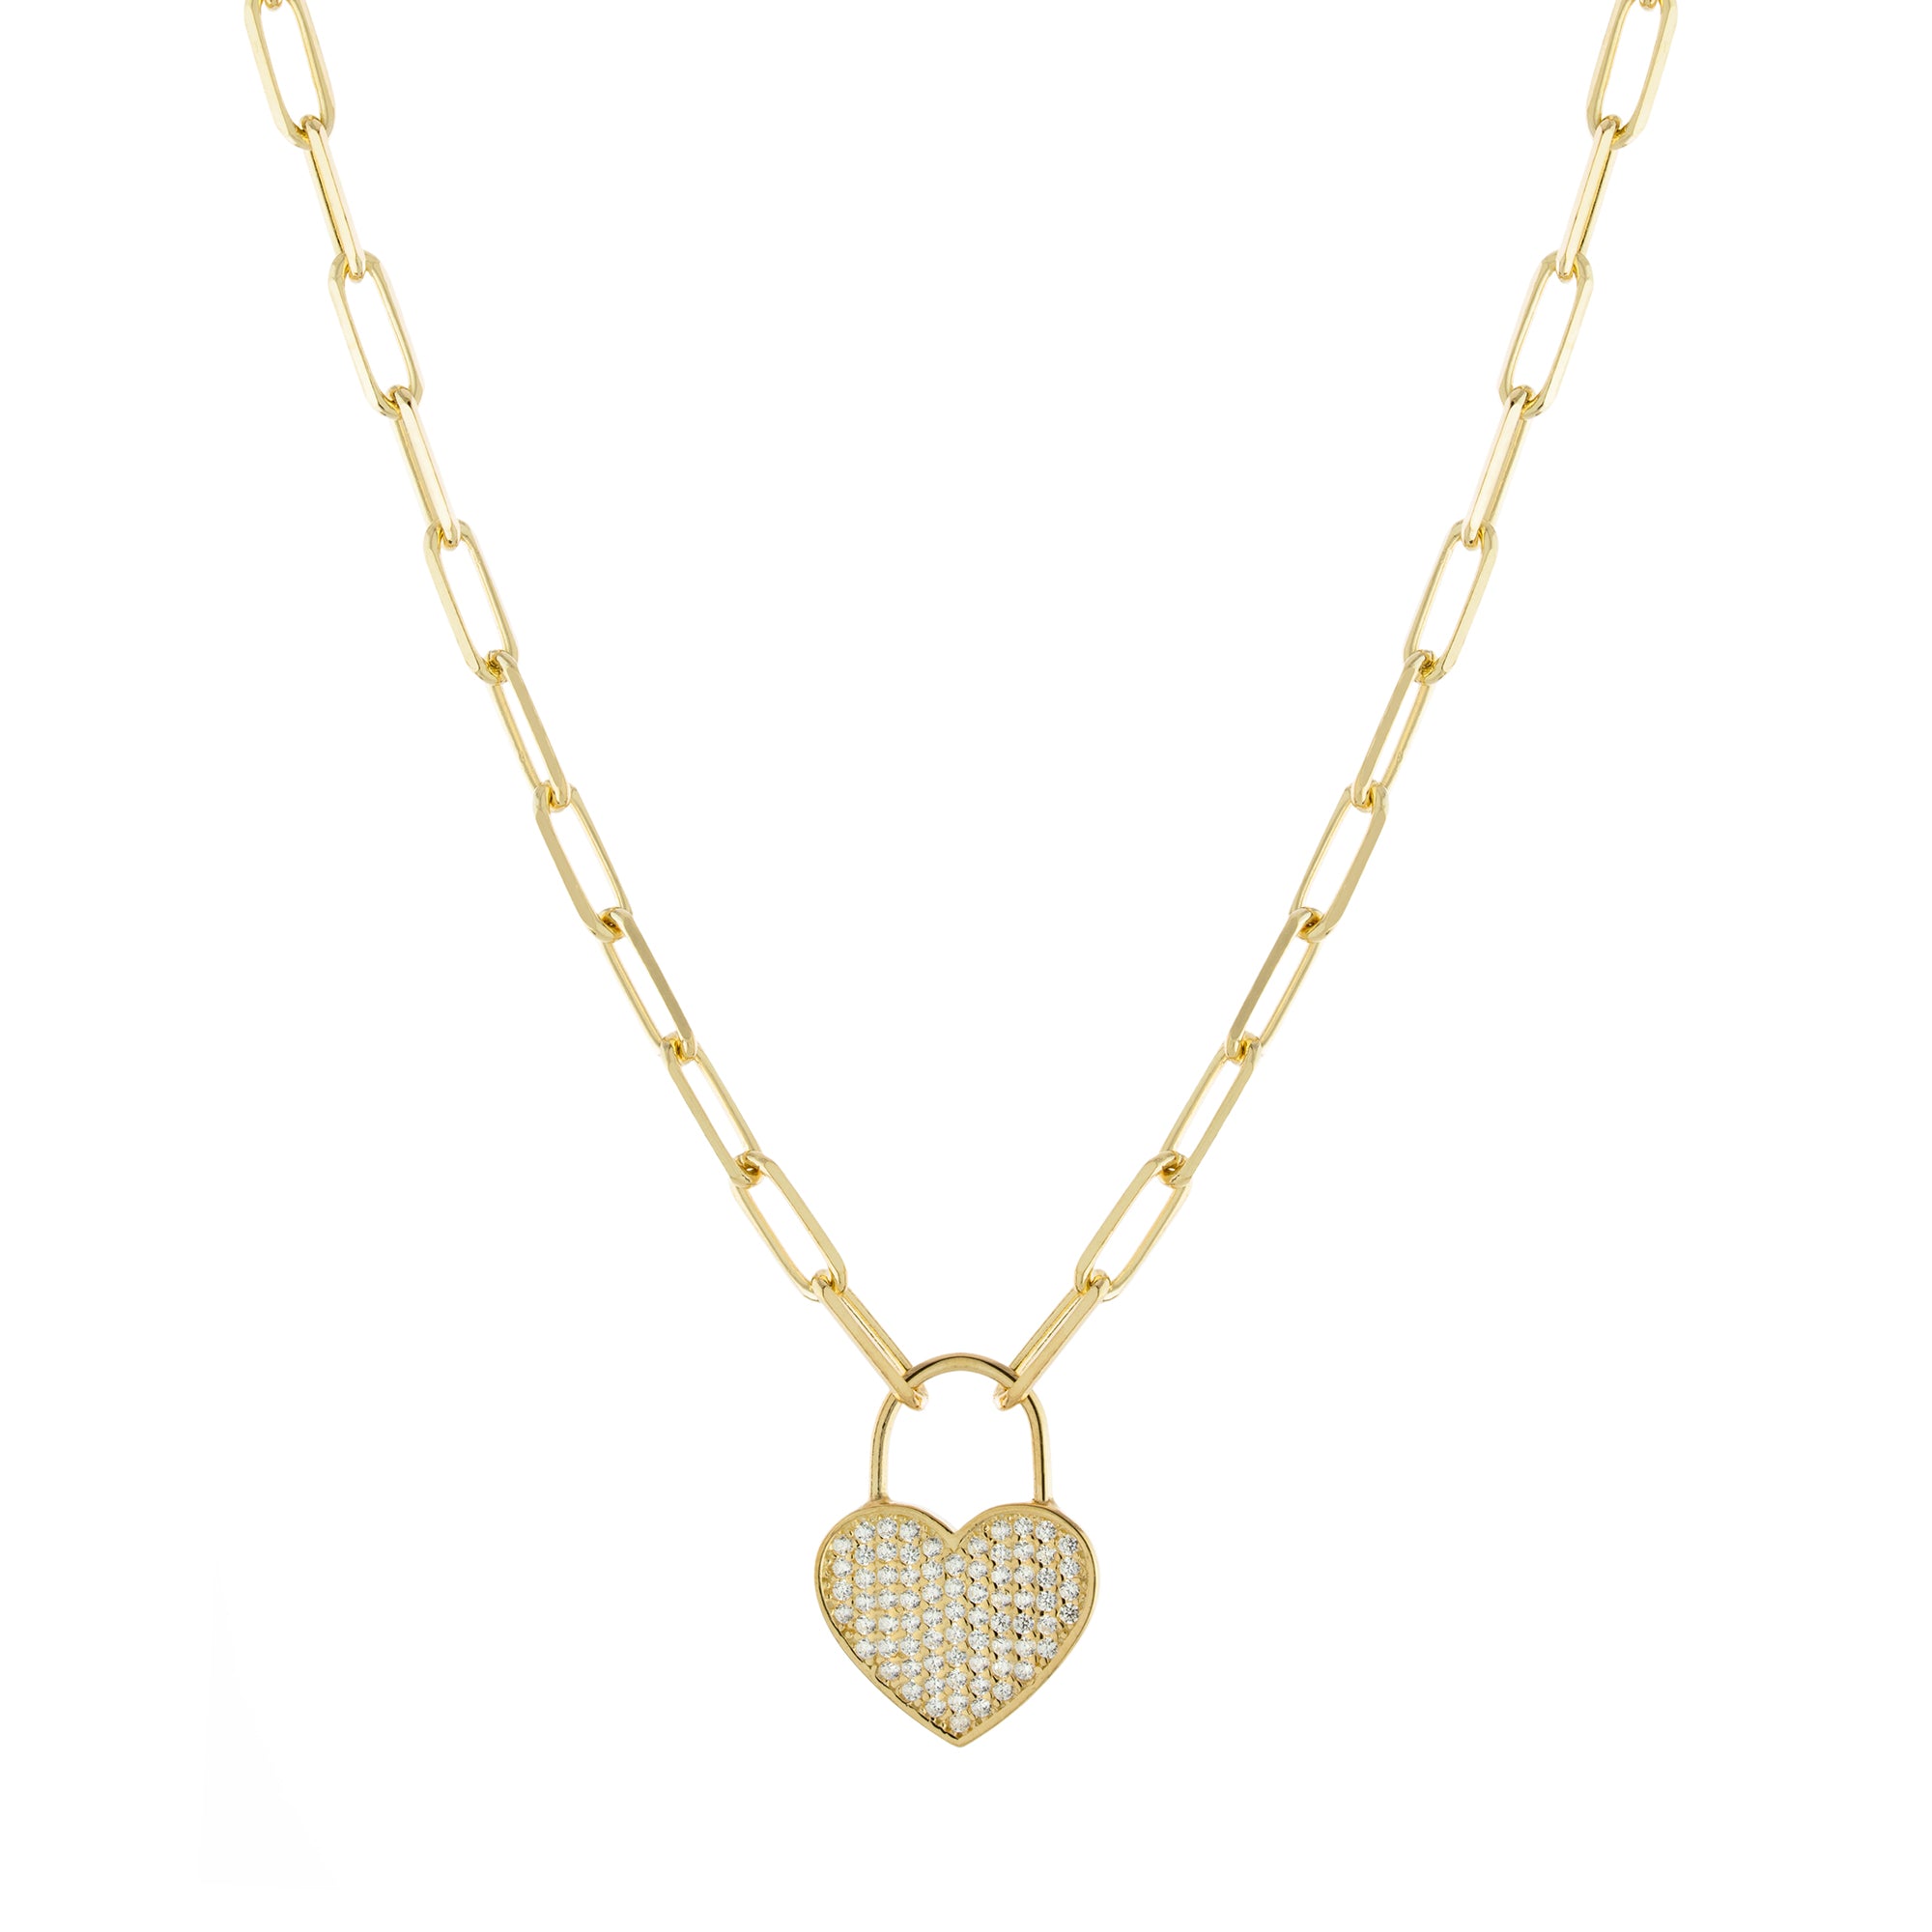 Studded Heart Necklace